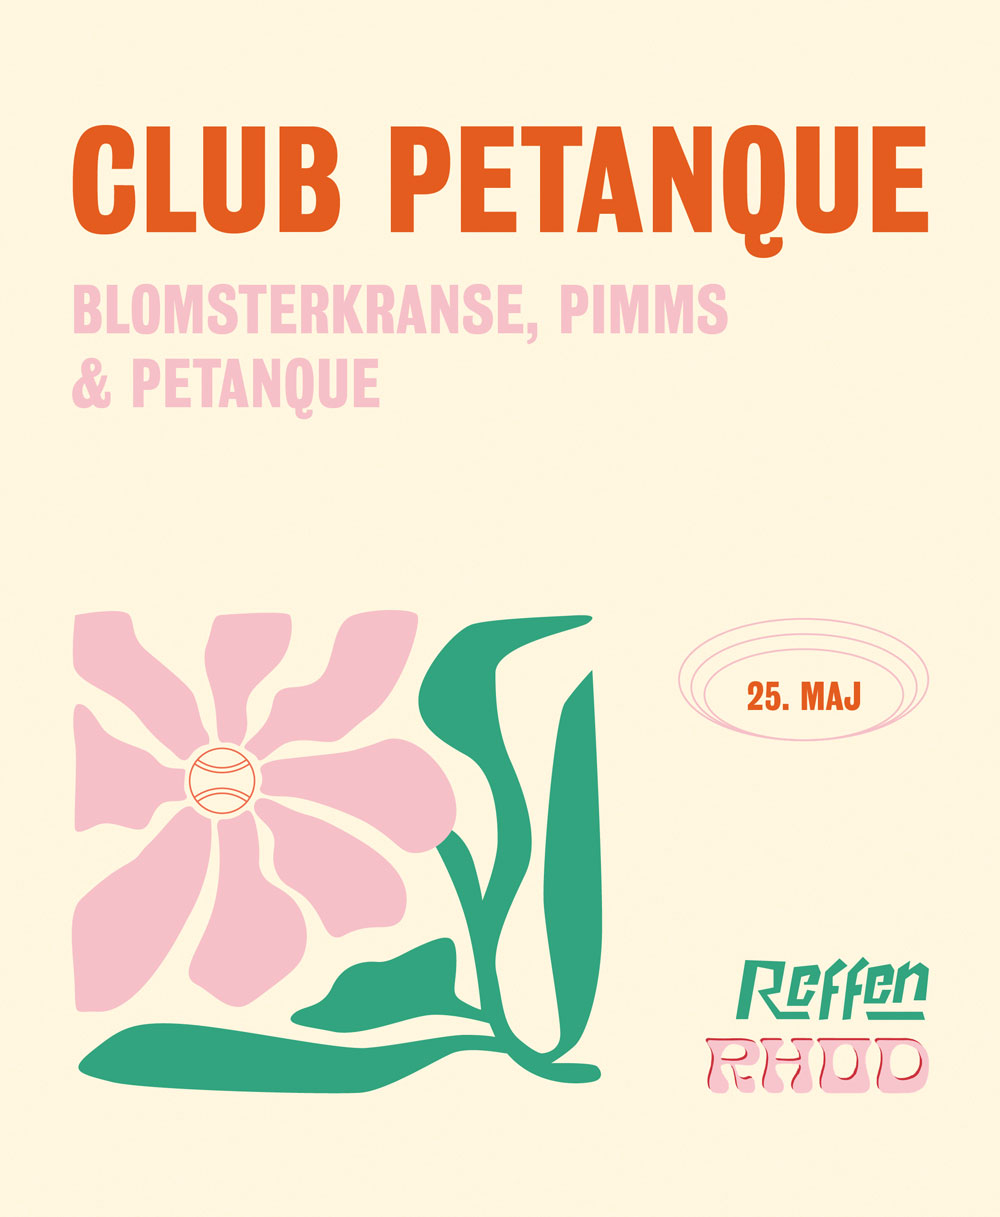 Club petanque